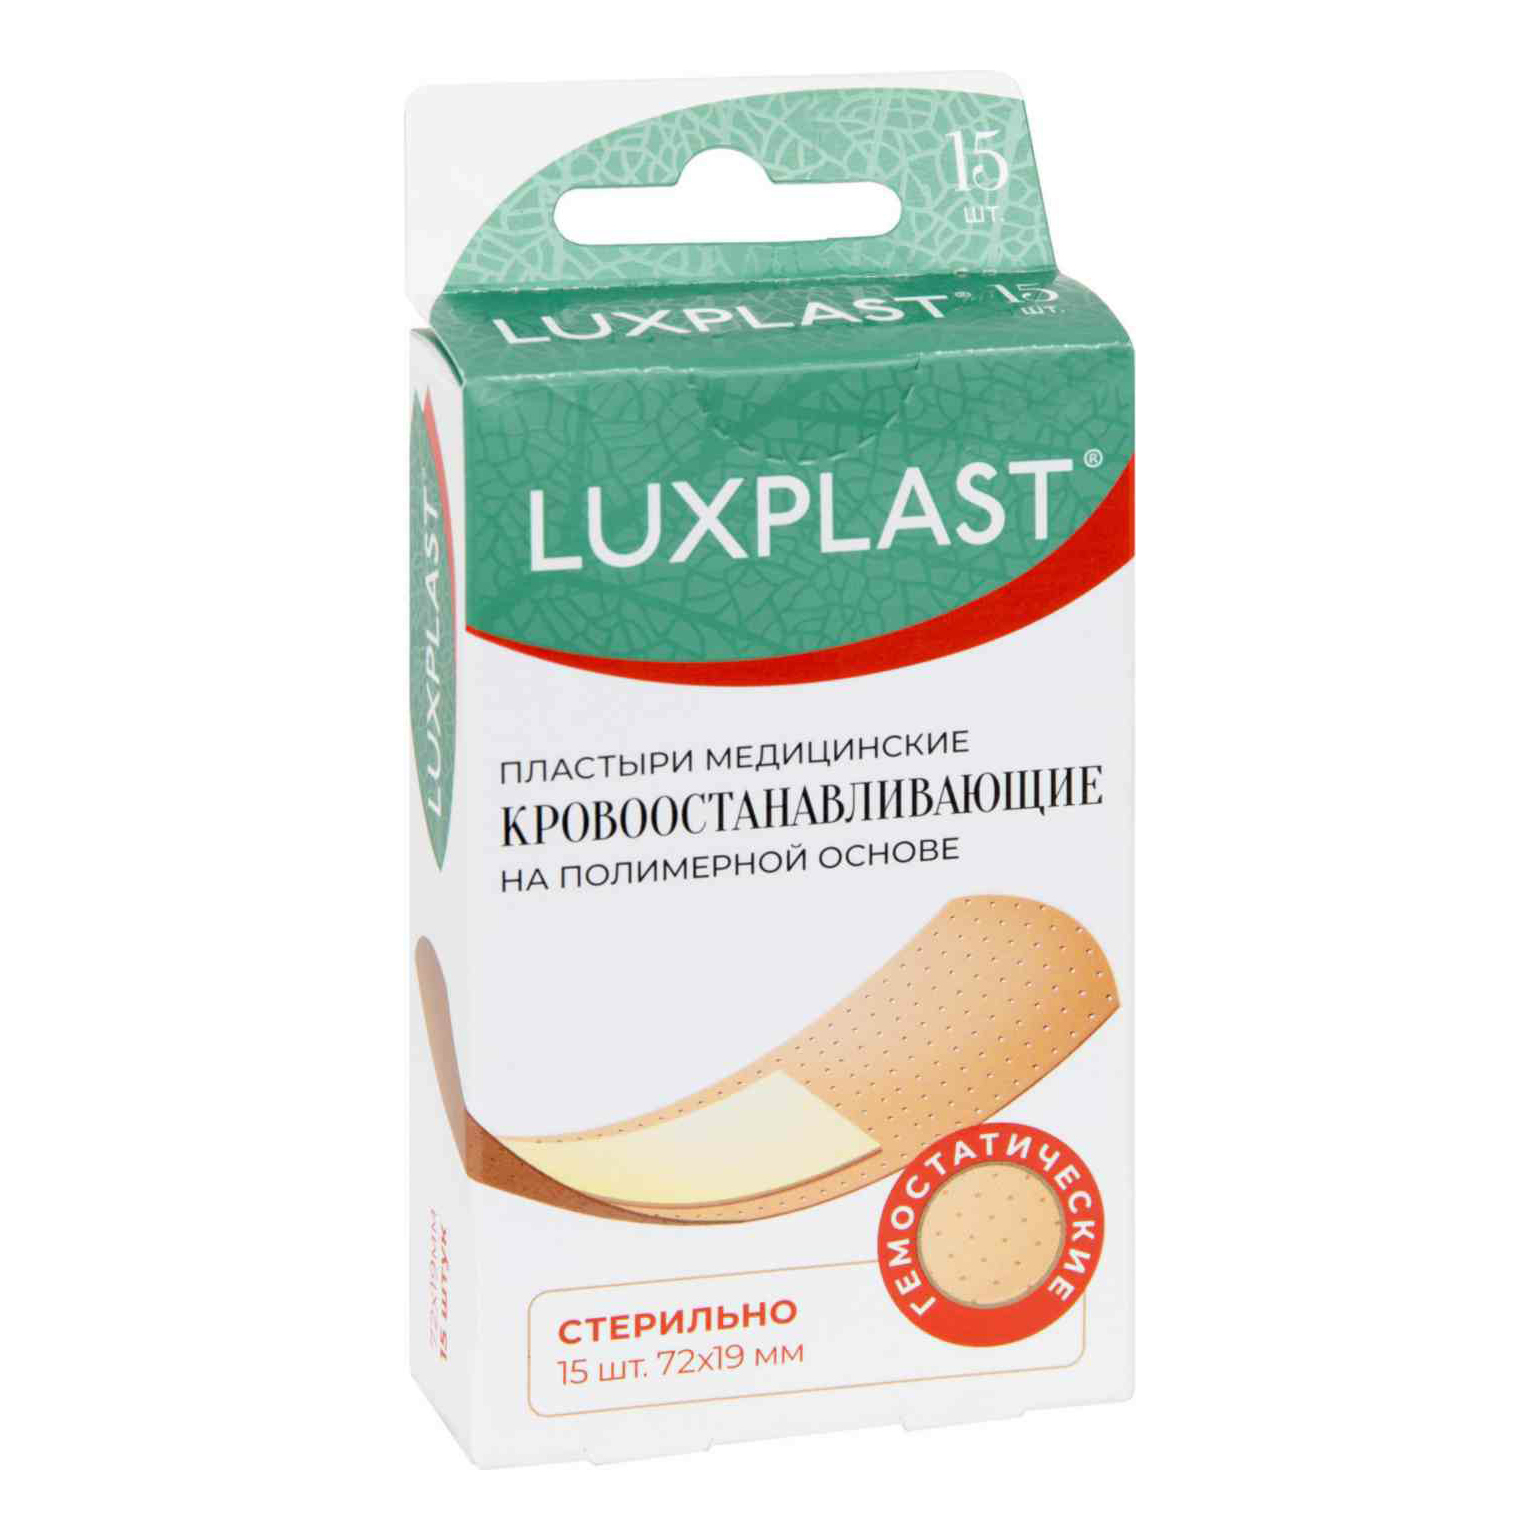 Пластыри Luxplast кровоостанавливающие 15 шт.